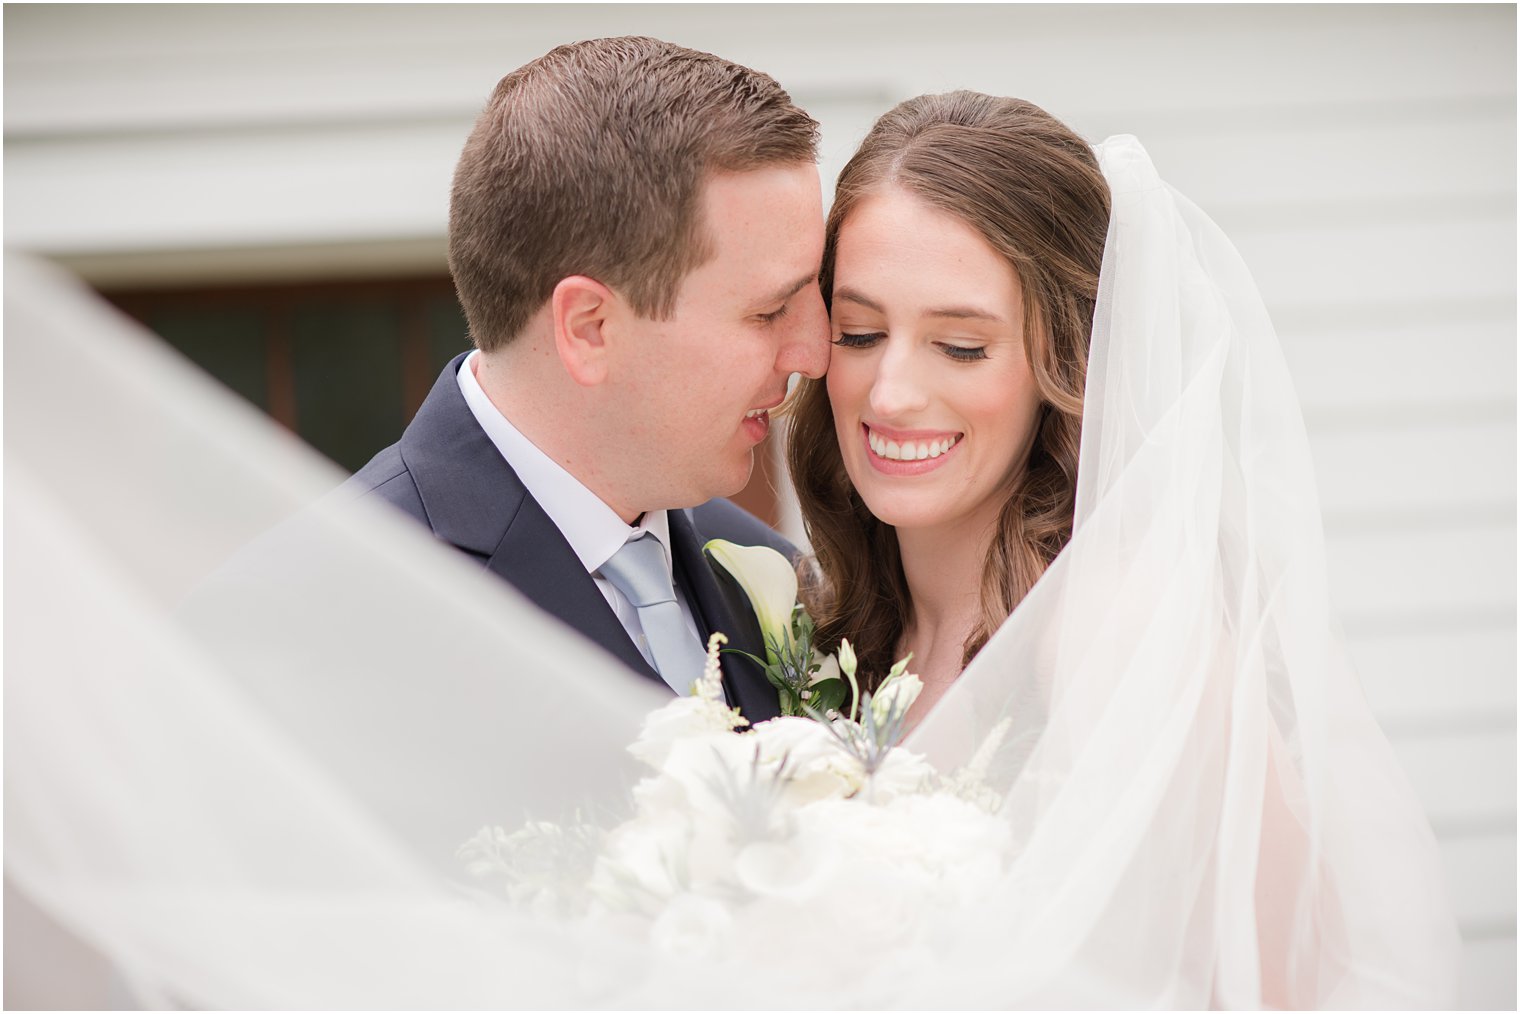 groom nuzzles bride's cheek during NJ wedding photos 